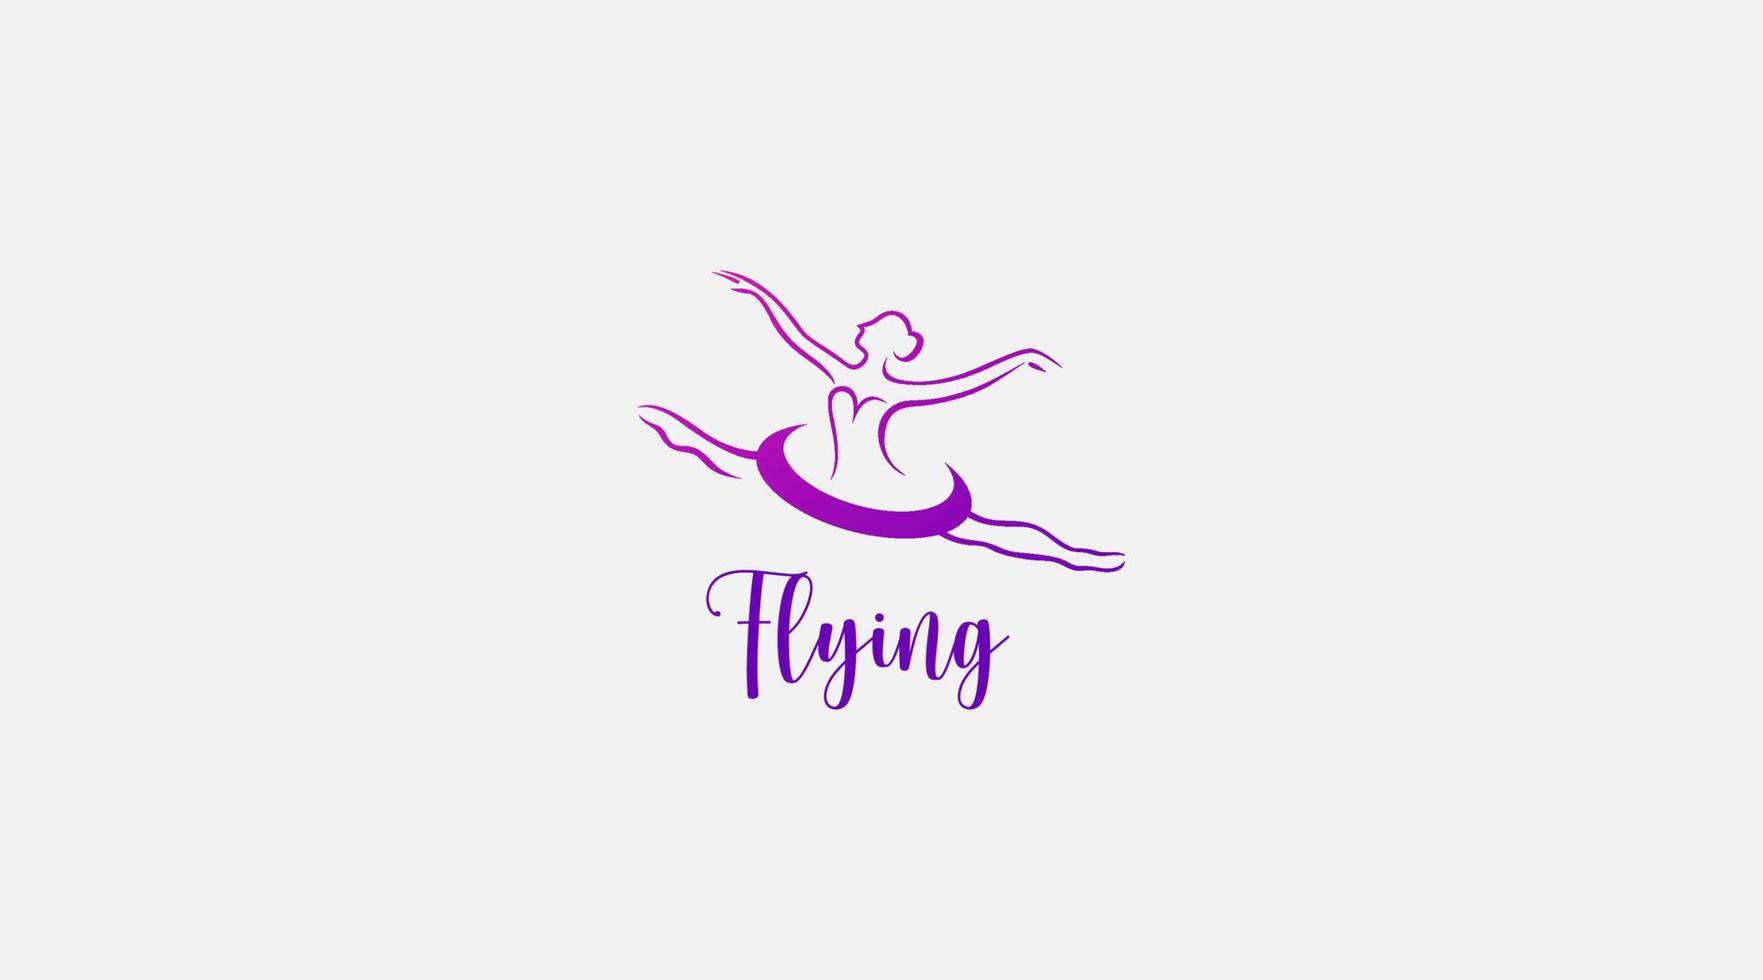 Flying dance lady vector logo design illustration